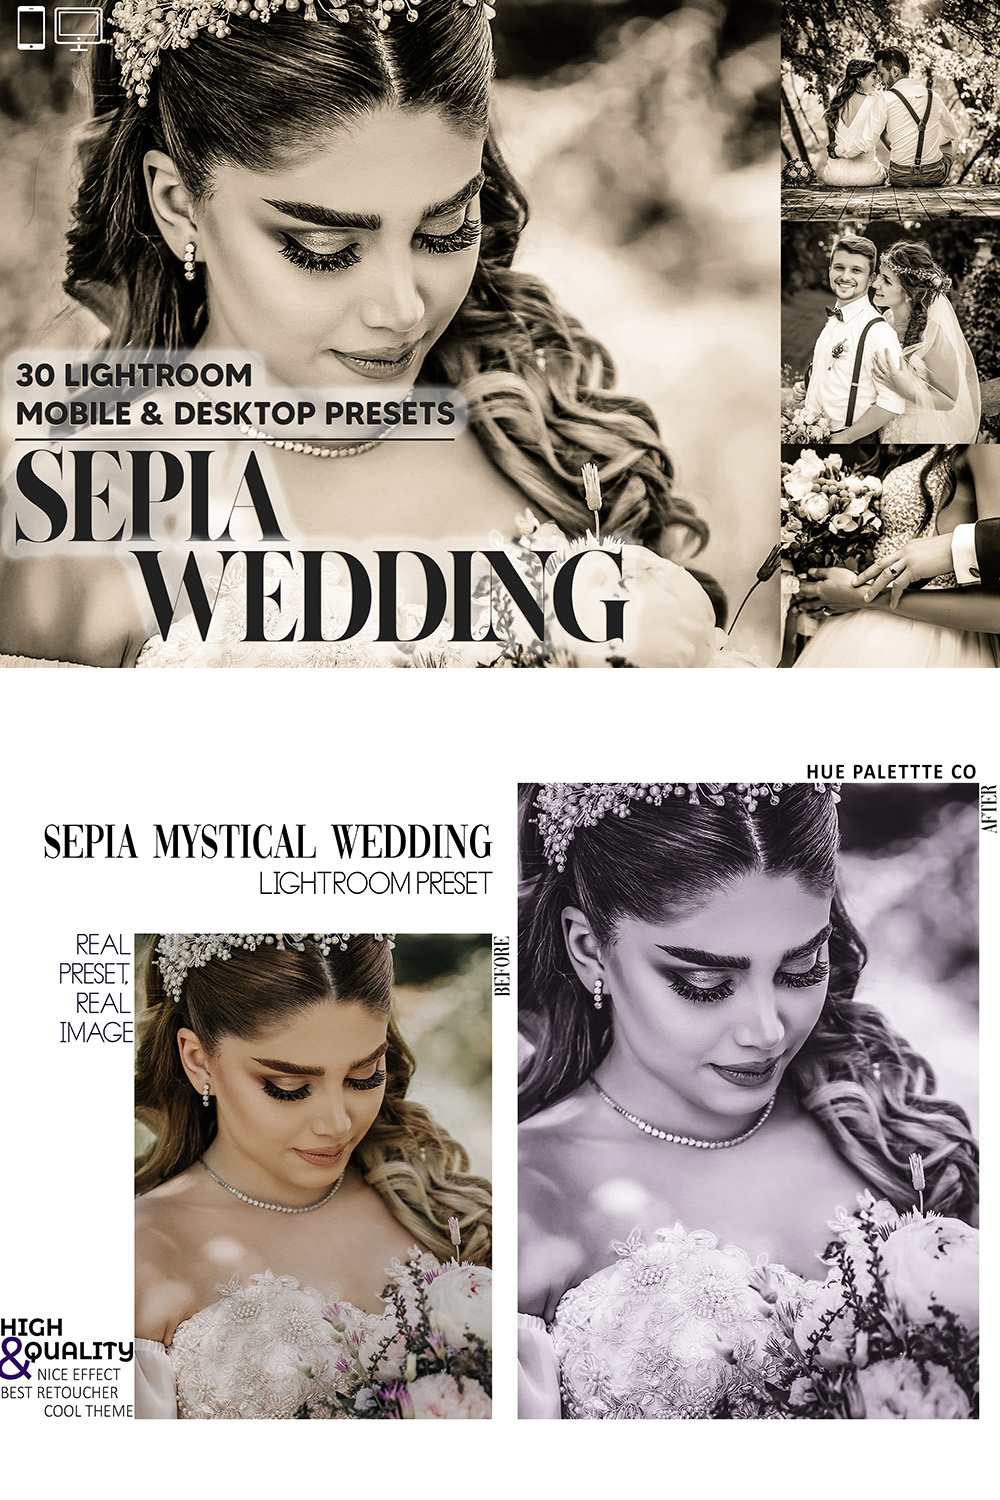 30 Sepia Wedding Lightroom Presets, Bride Groom Mobile Preset, Monochrome Desktop Lifestyle Portrait Theme For Instagram LR Filter DNG B&W pinterest preview image.